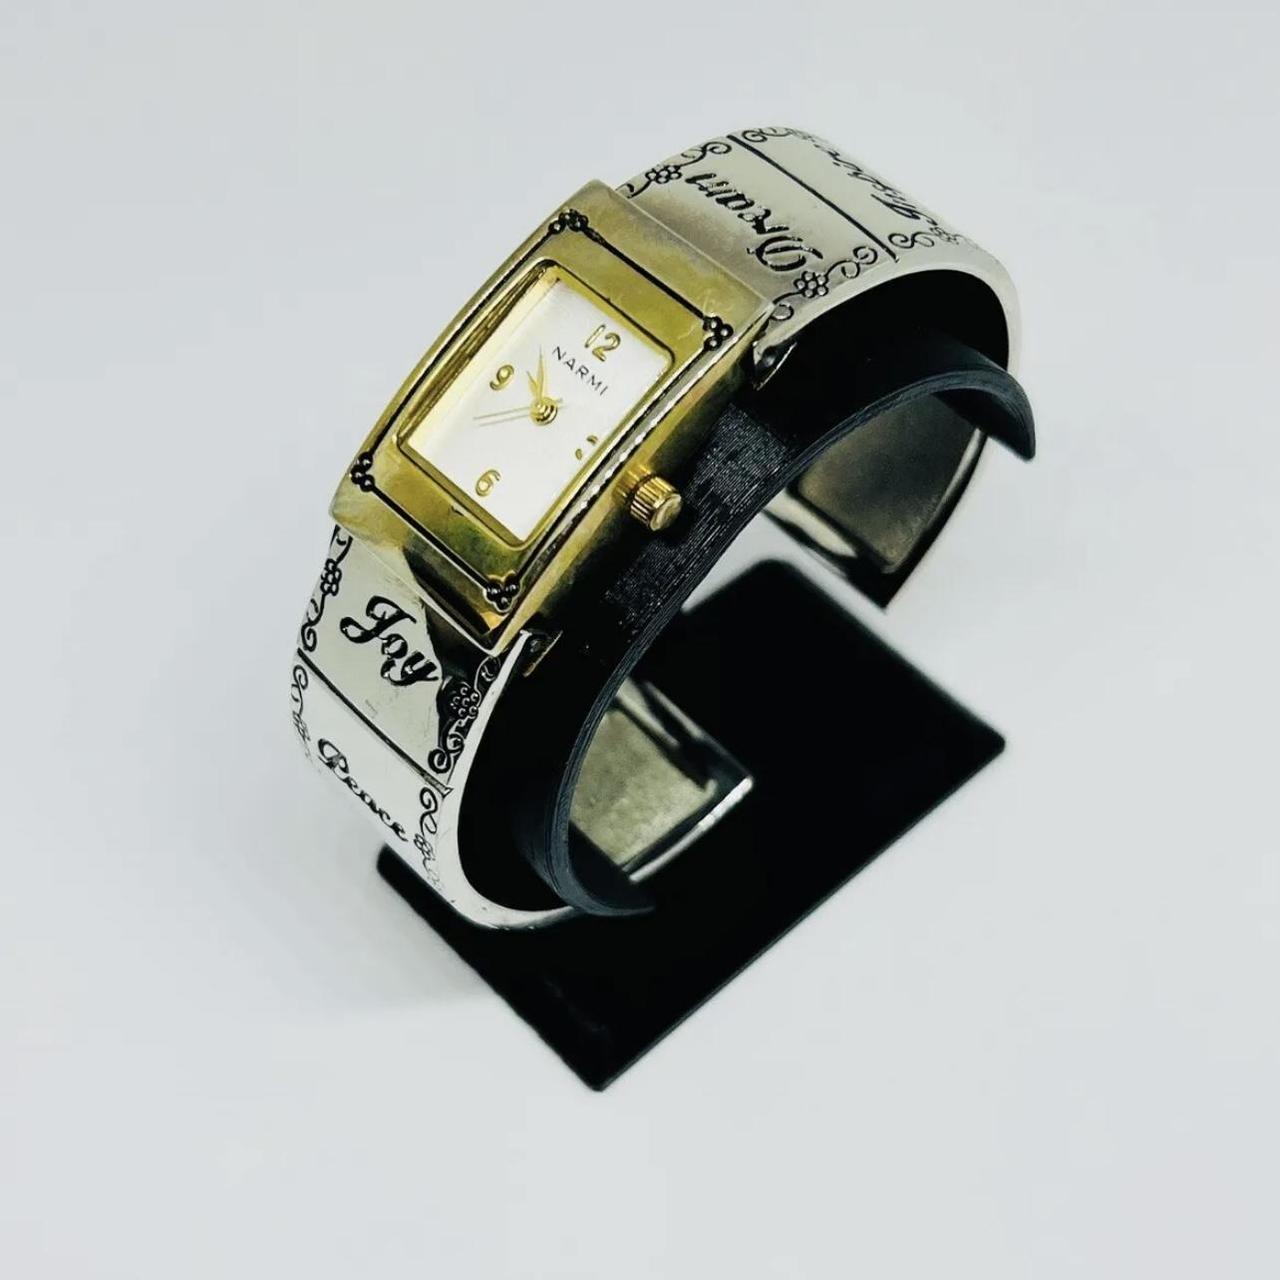 Buy Rochees Men Wrist Watch [1500-873G IGP GOLD] Online - Best Price Rochees  Men Wrist Watch [1500-873G IGP GOLD] - Justdial Shop Online.